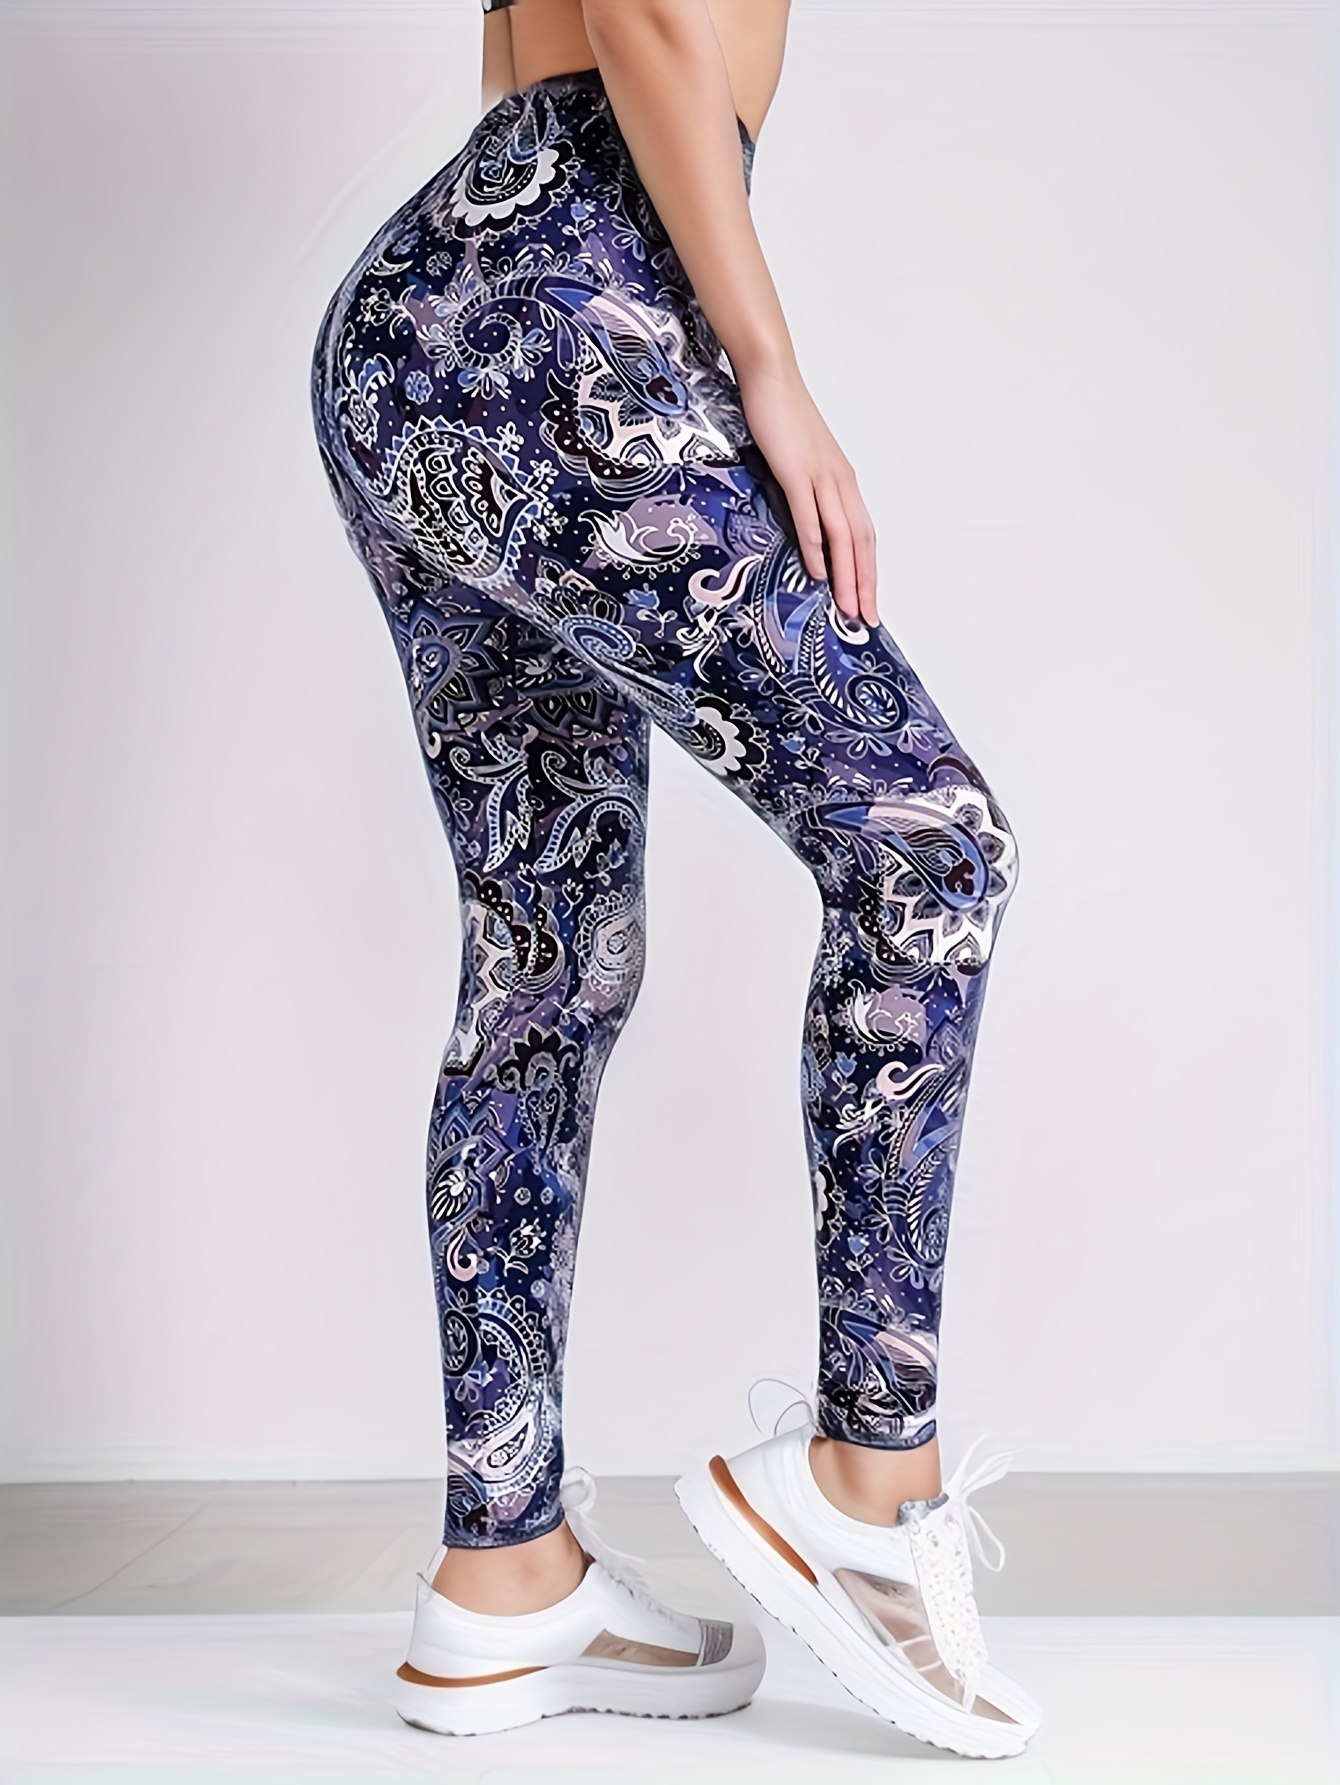 Women Casual Fashion Tight Sports Yoga Pants Flower Print Leggings